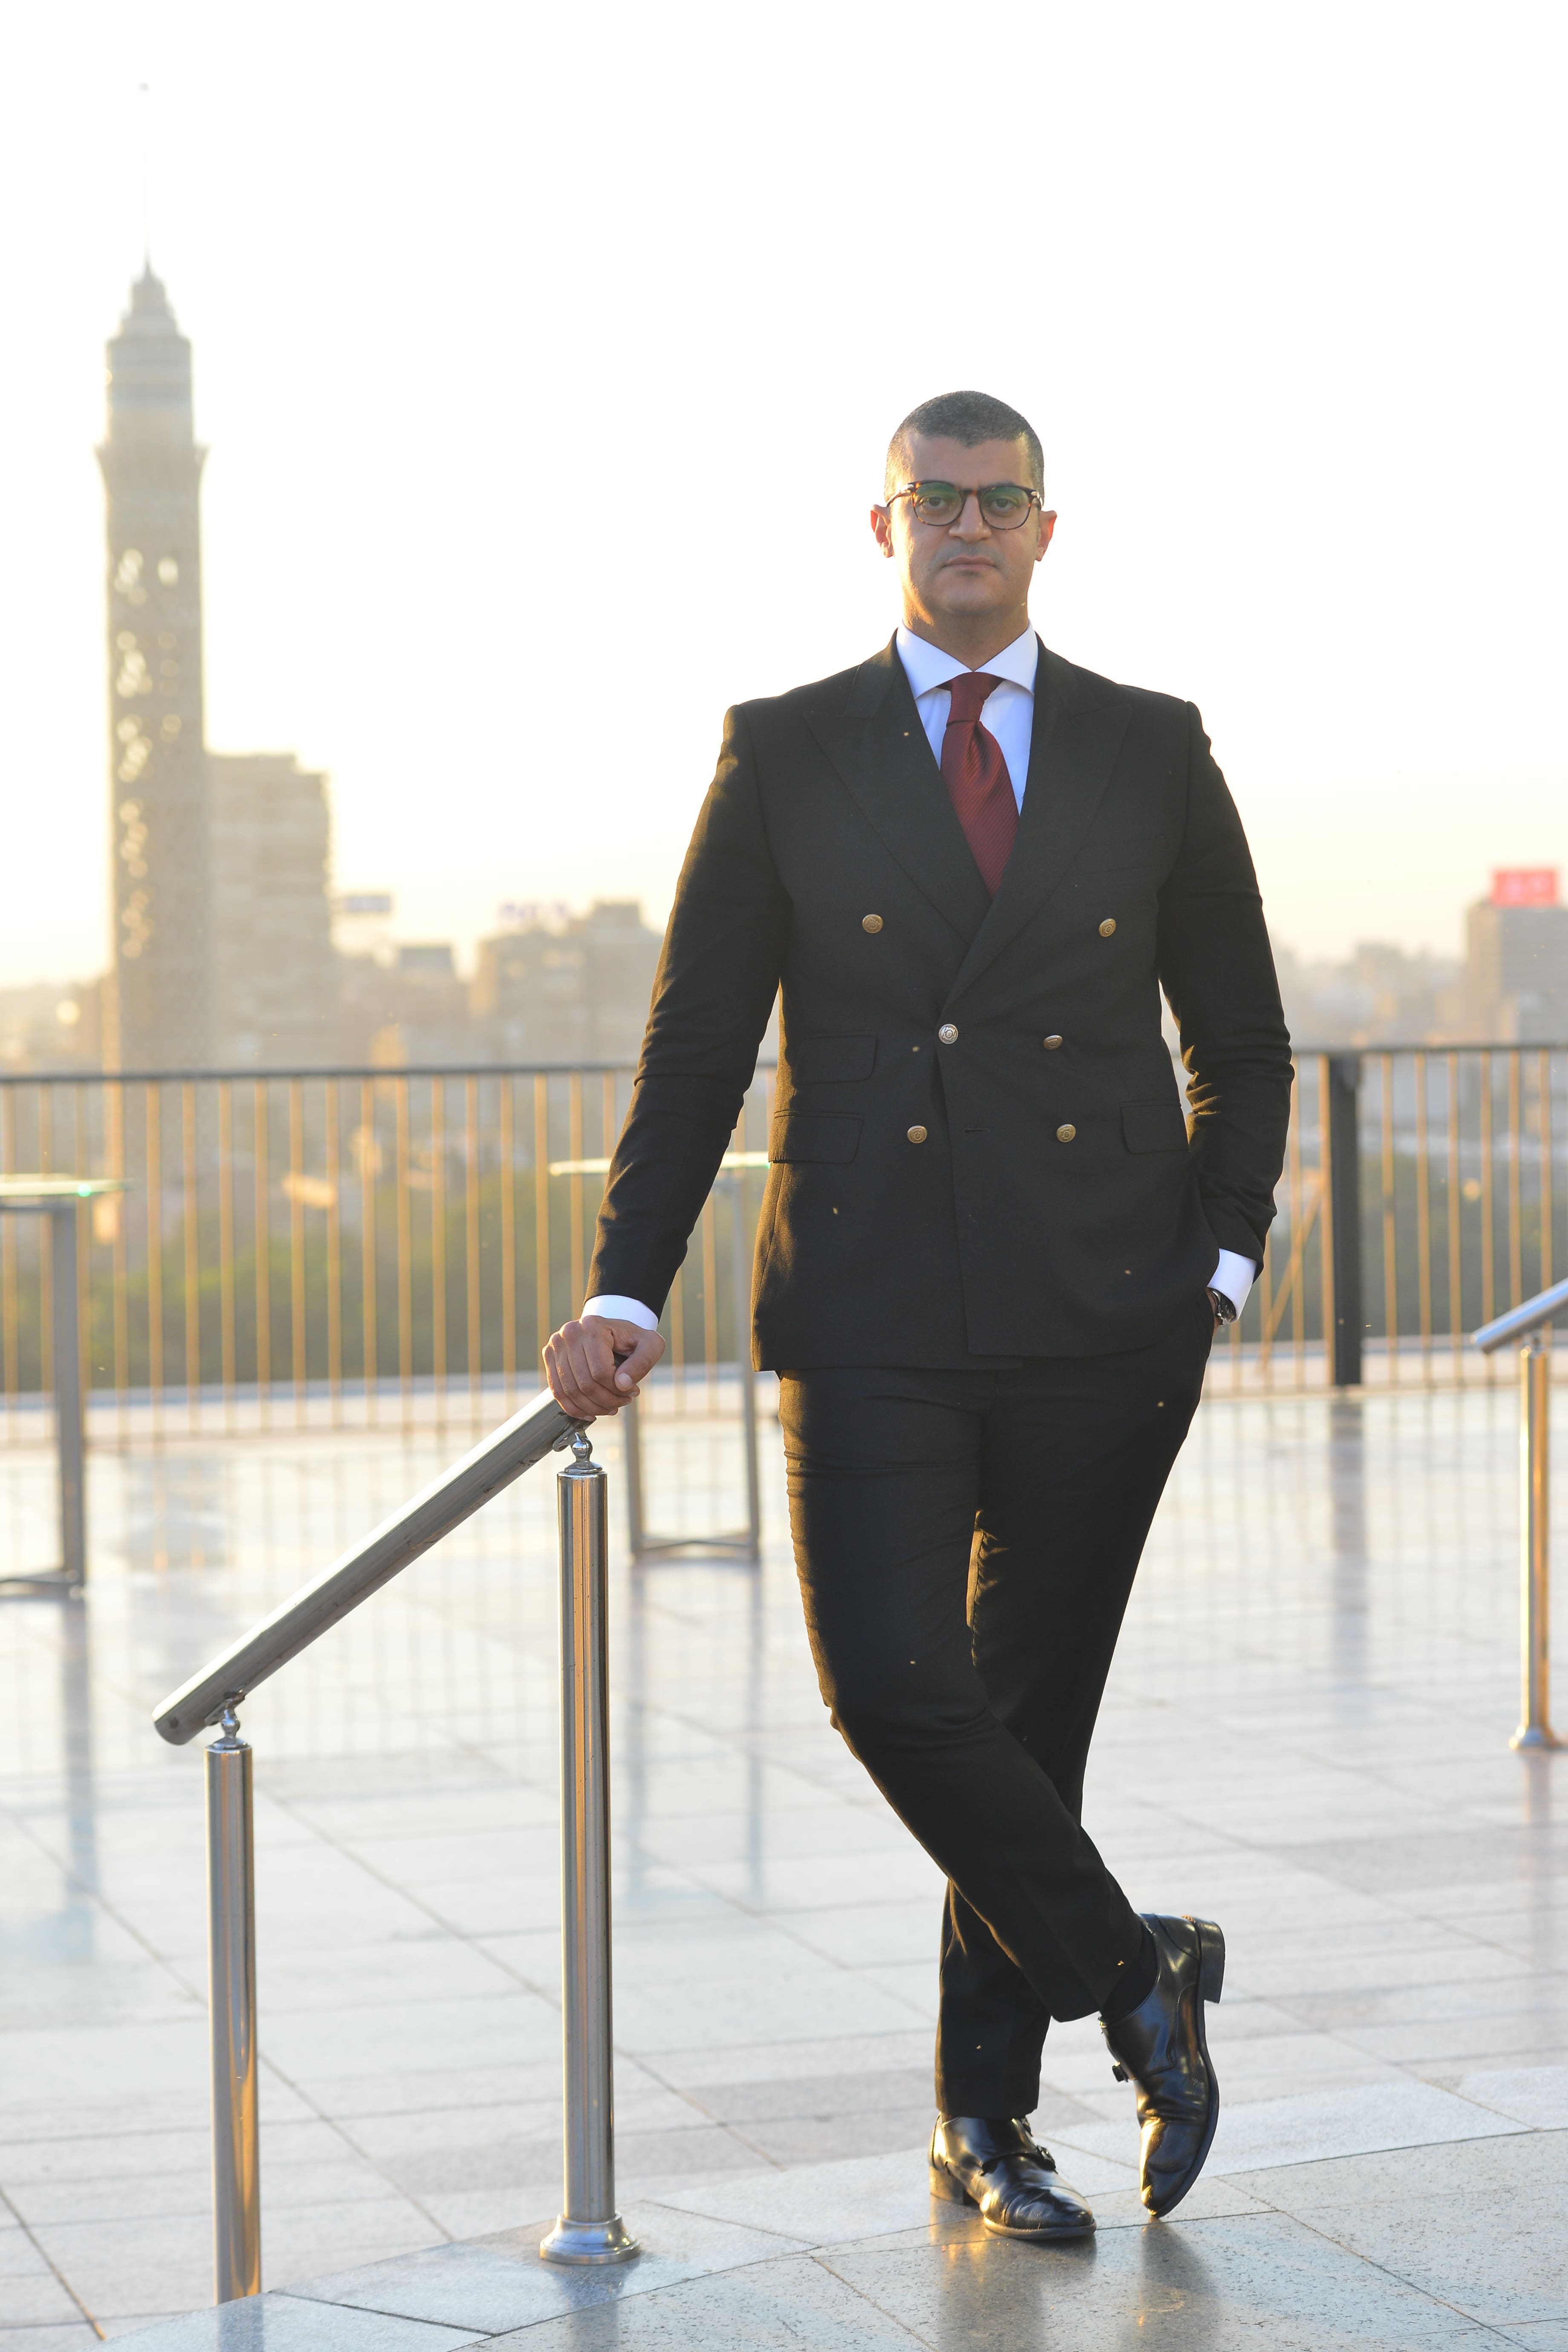 Mohamed El Keiy, Director of Sales & Marketing